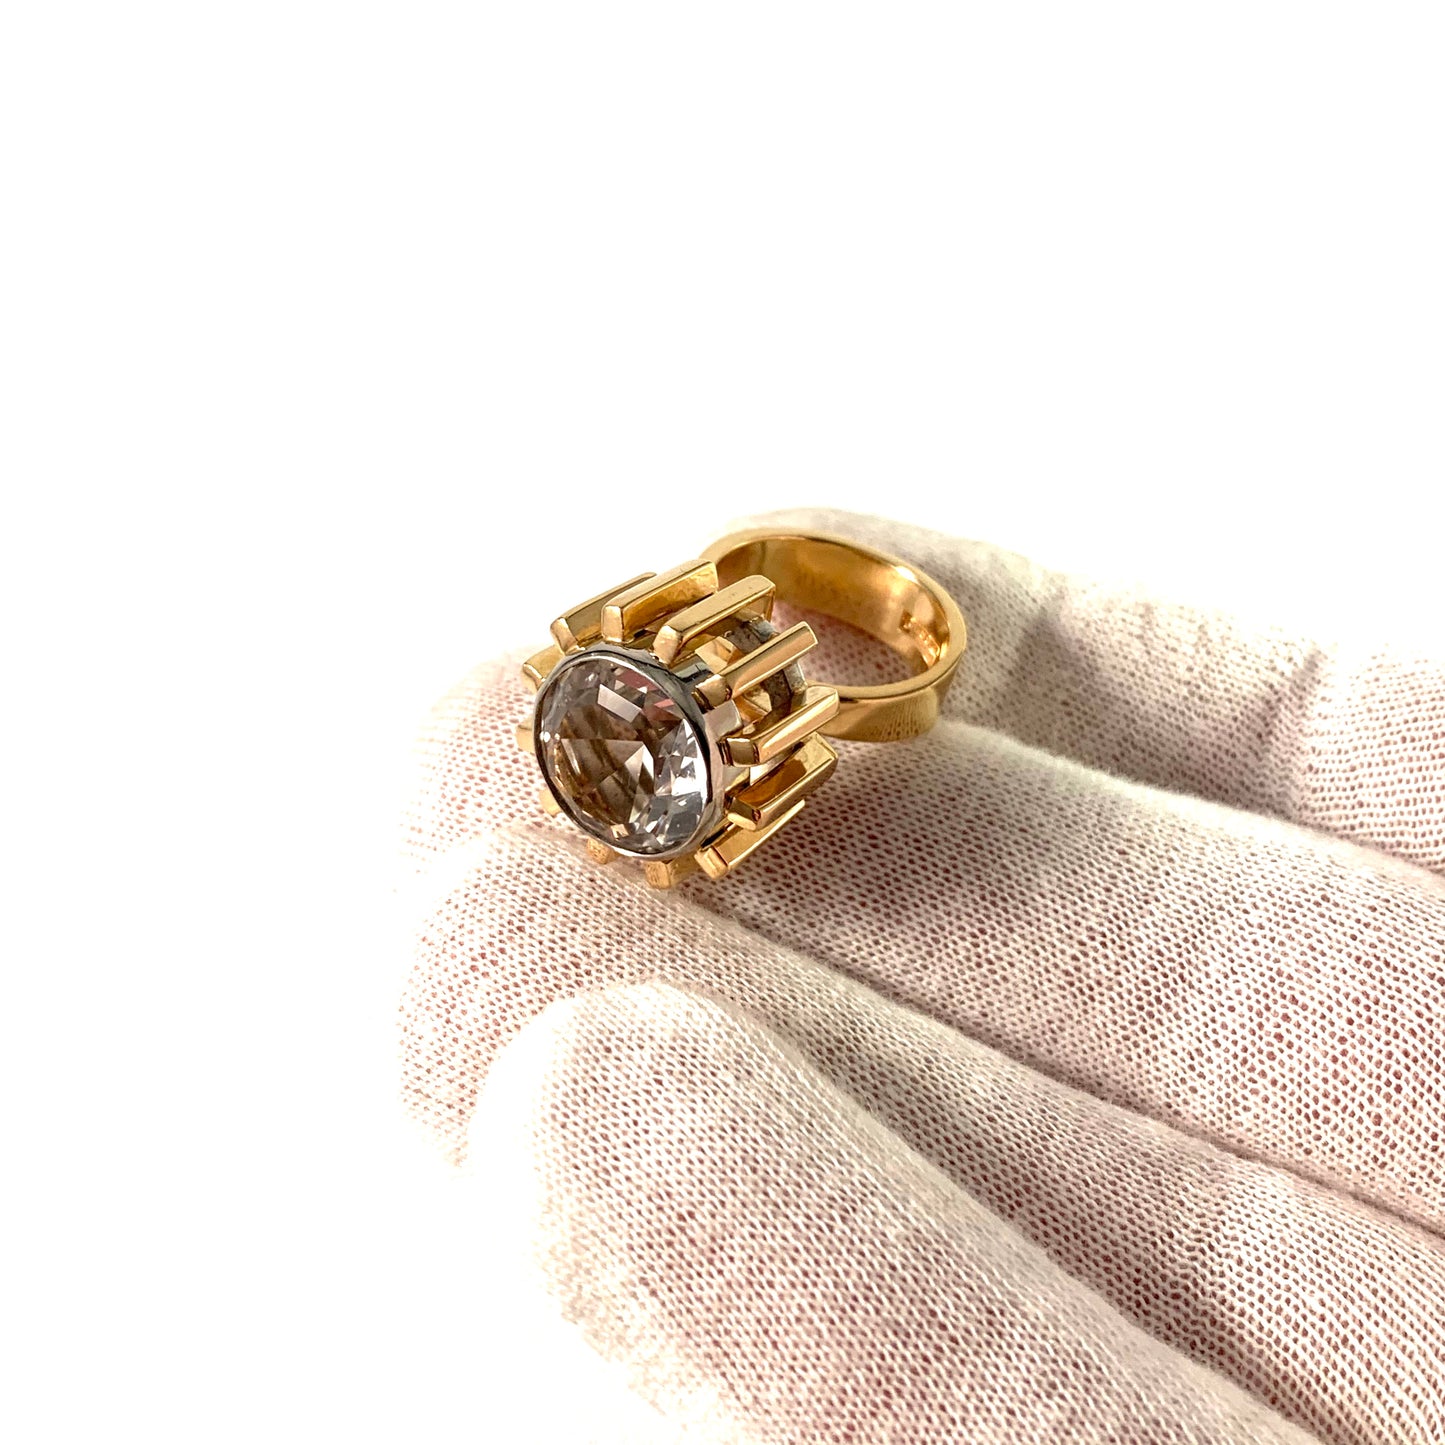 Claes E Giertta, Stockholm year 1965 Massive 19.3 gram 18k Gold Rock Crystal Modernist Unique Ring.